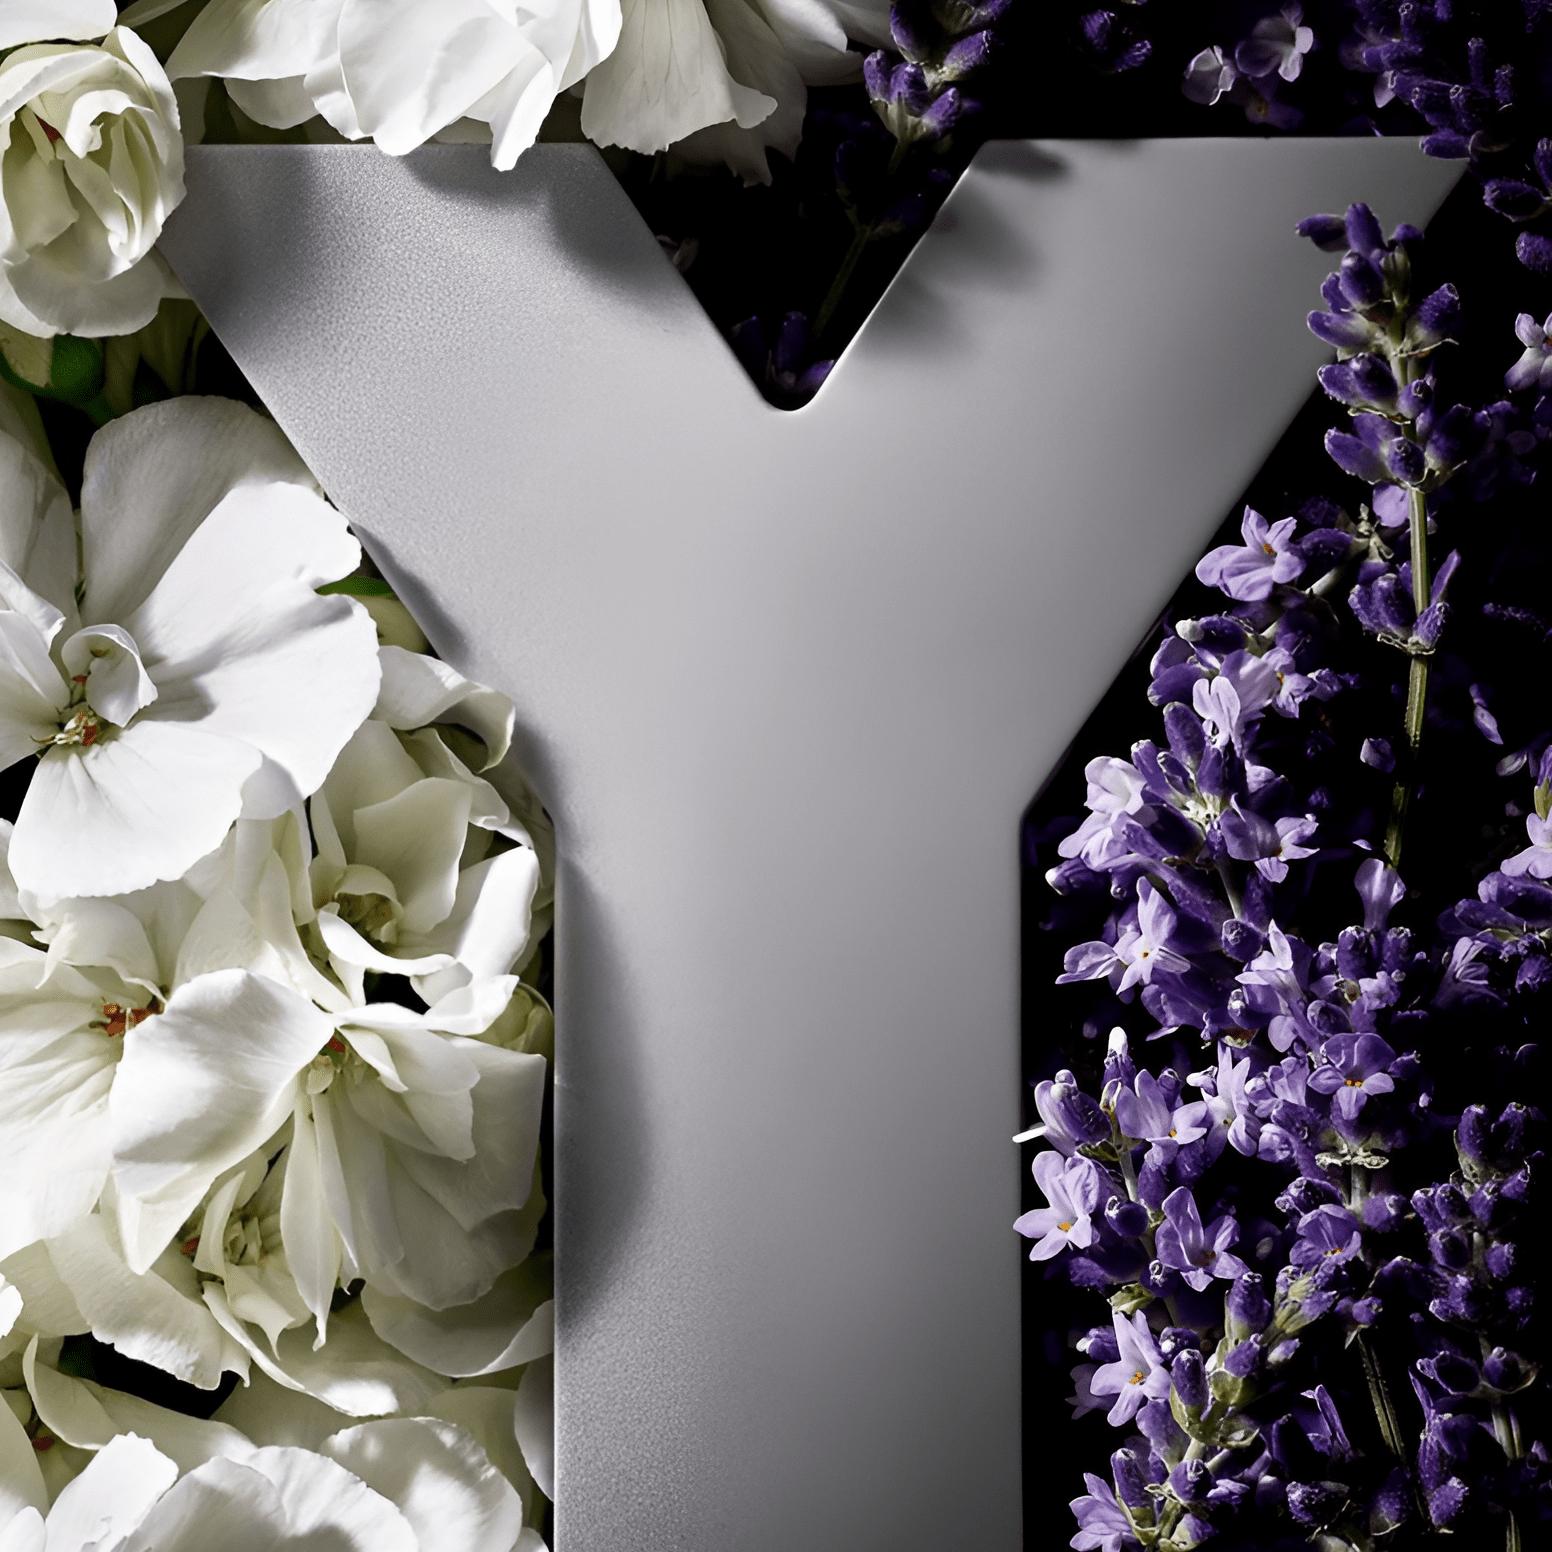 Yves Saint Laurent Y EDP Intense | My Perfume Shop Australia